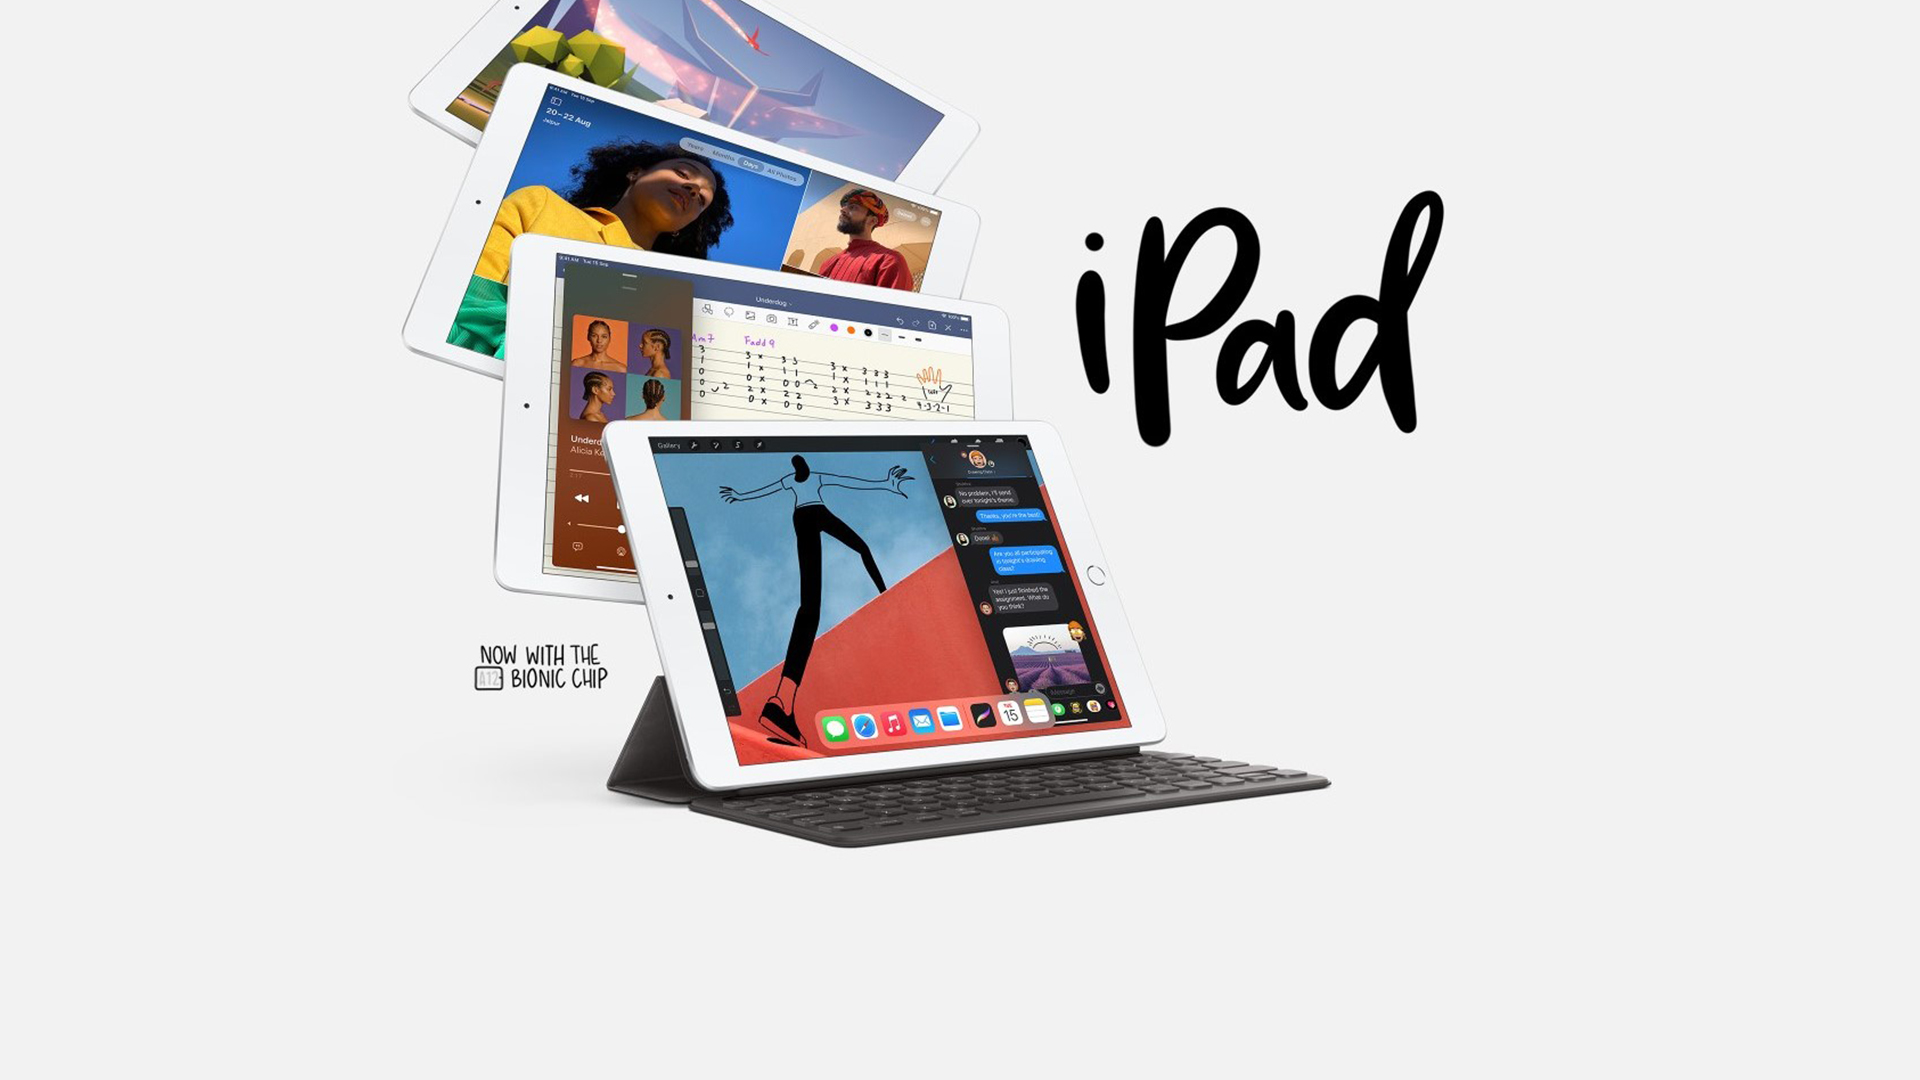 Apple iPad 8th Generation